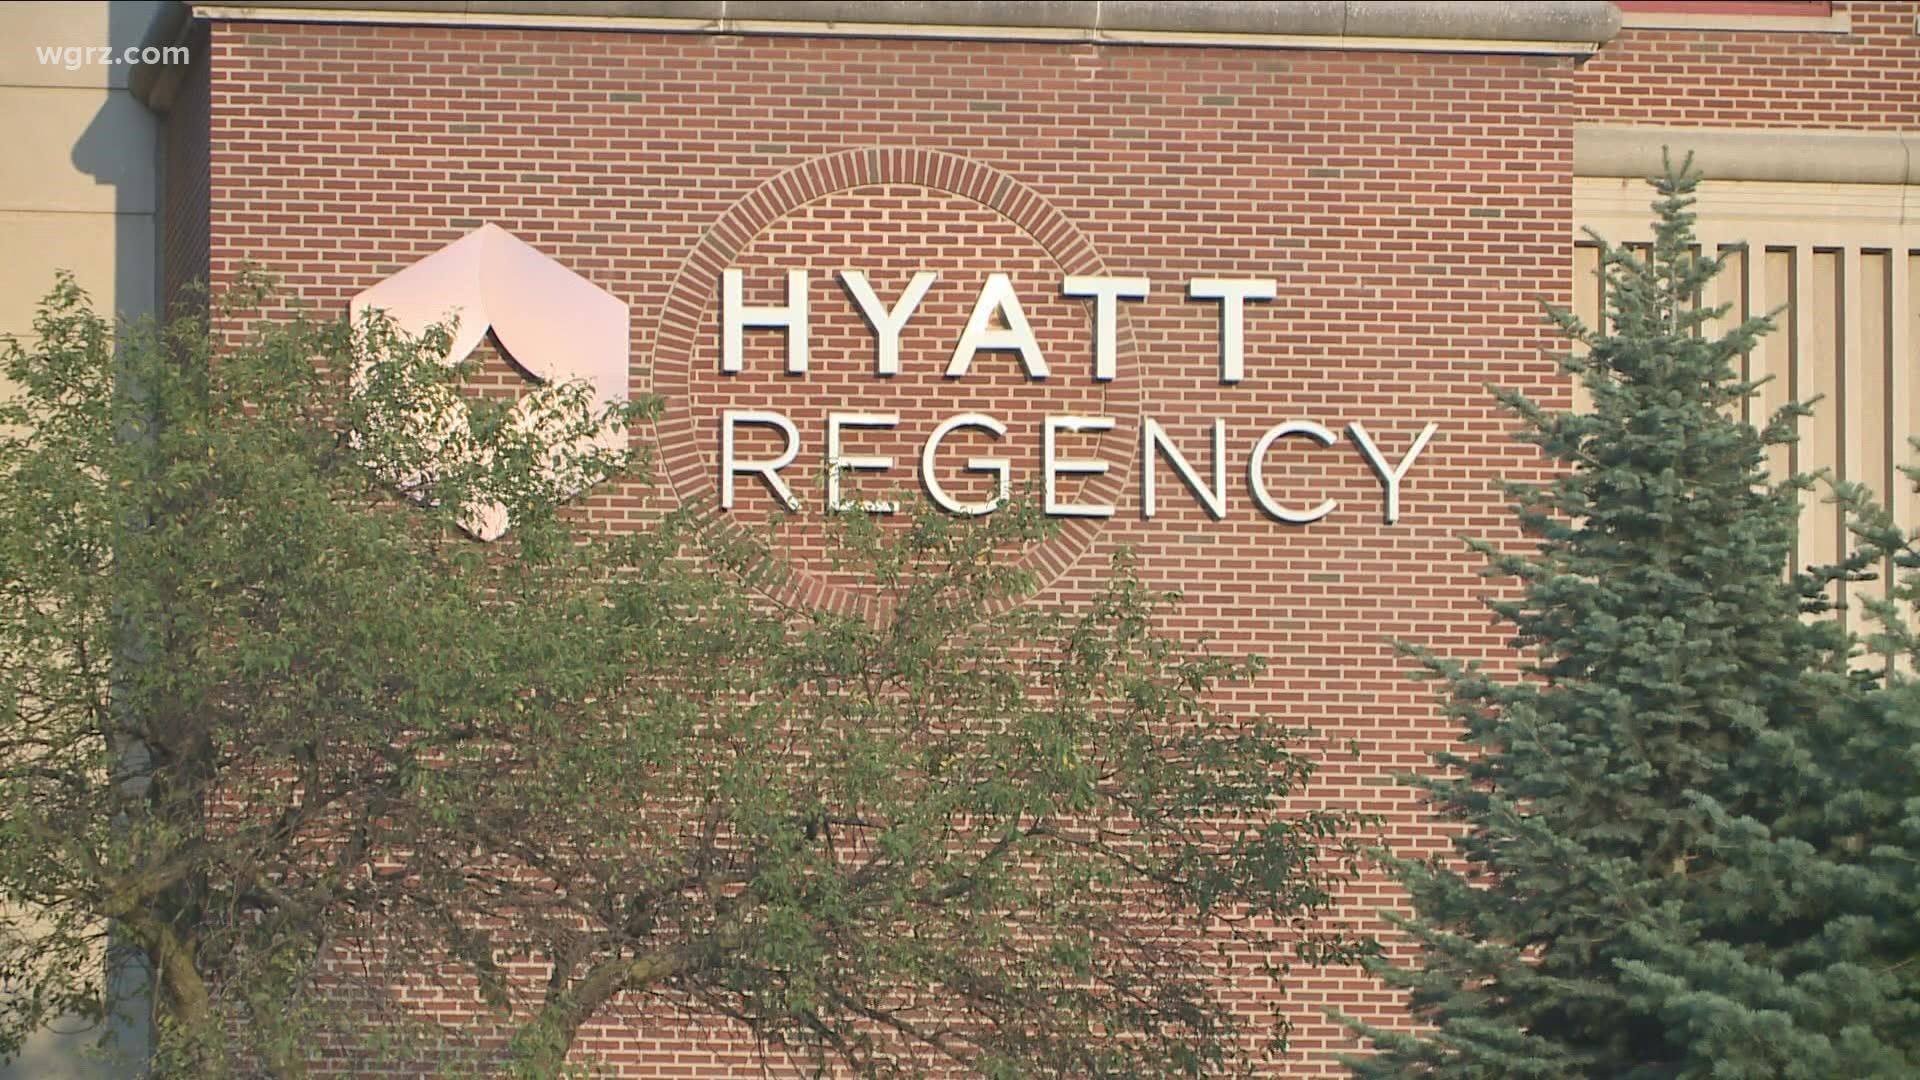 Douglas Jemal's sole bid of 15 million dollars wins the Hyatt Regency Hotel auction